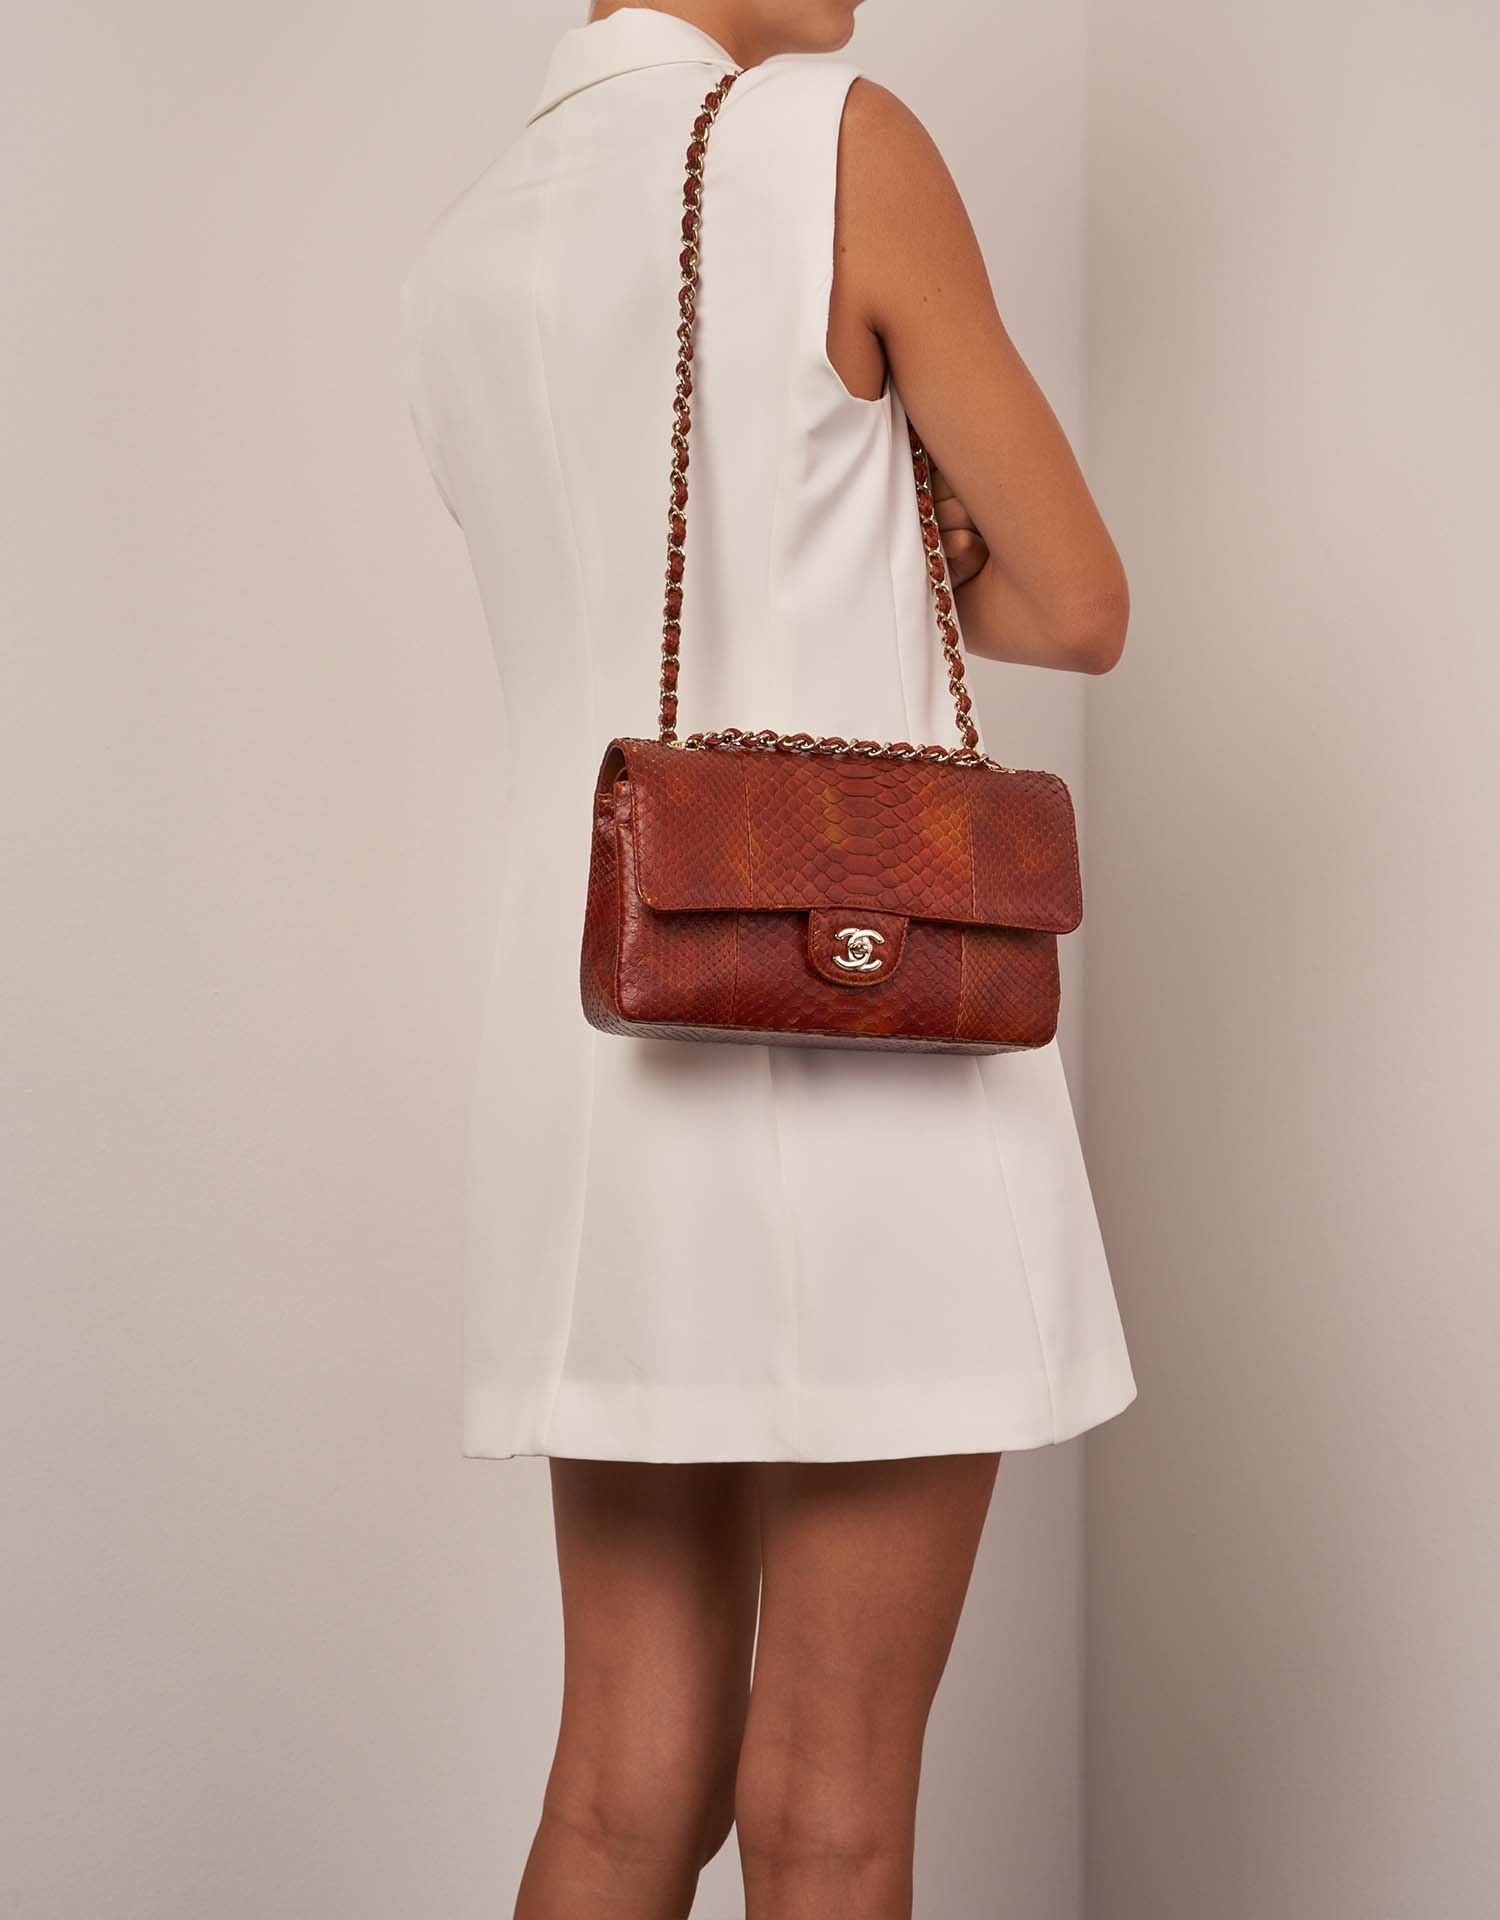 Chanel Timeless Medium Red-Orange Sizes Worn | Sell your designer bag on Saclab.com